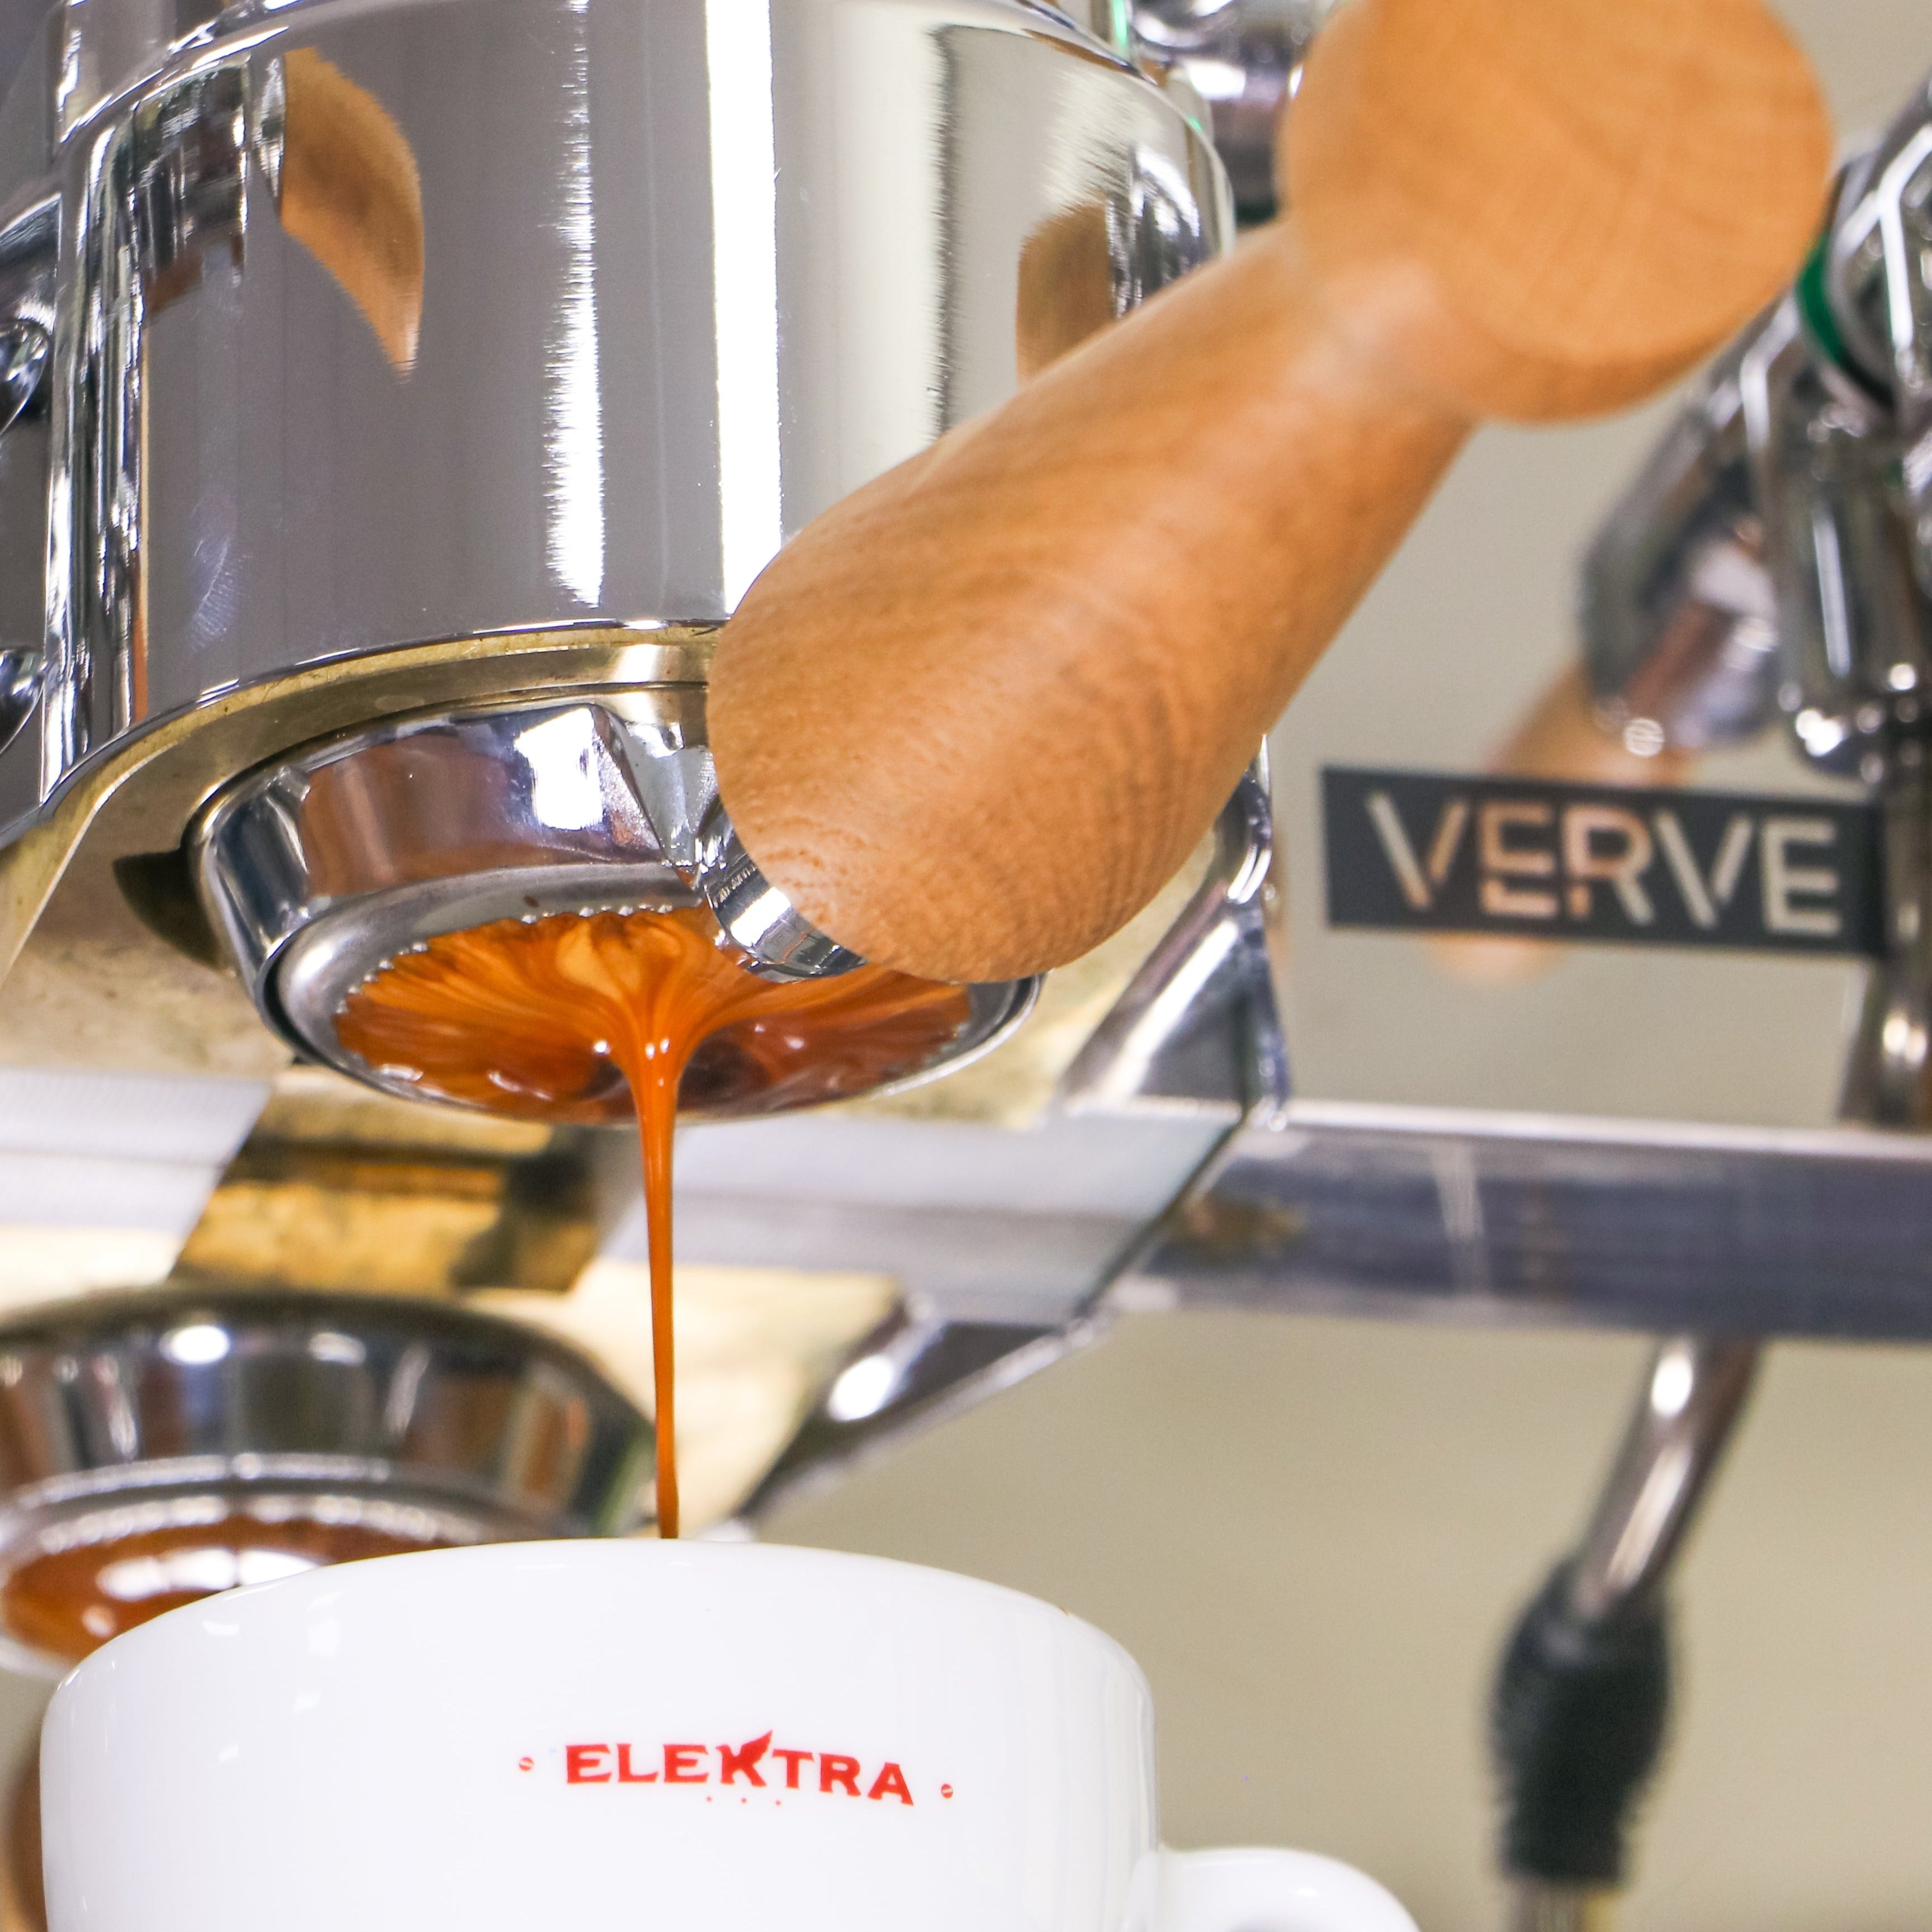 Elektra | Verve wood and steel espresso machine